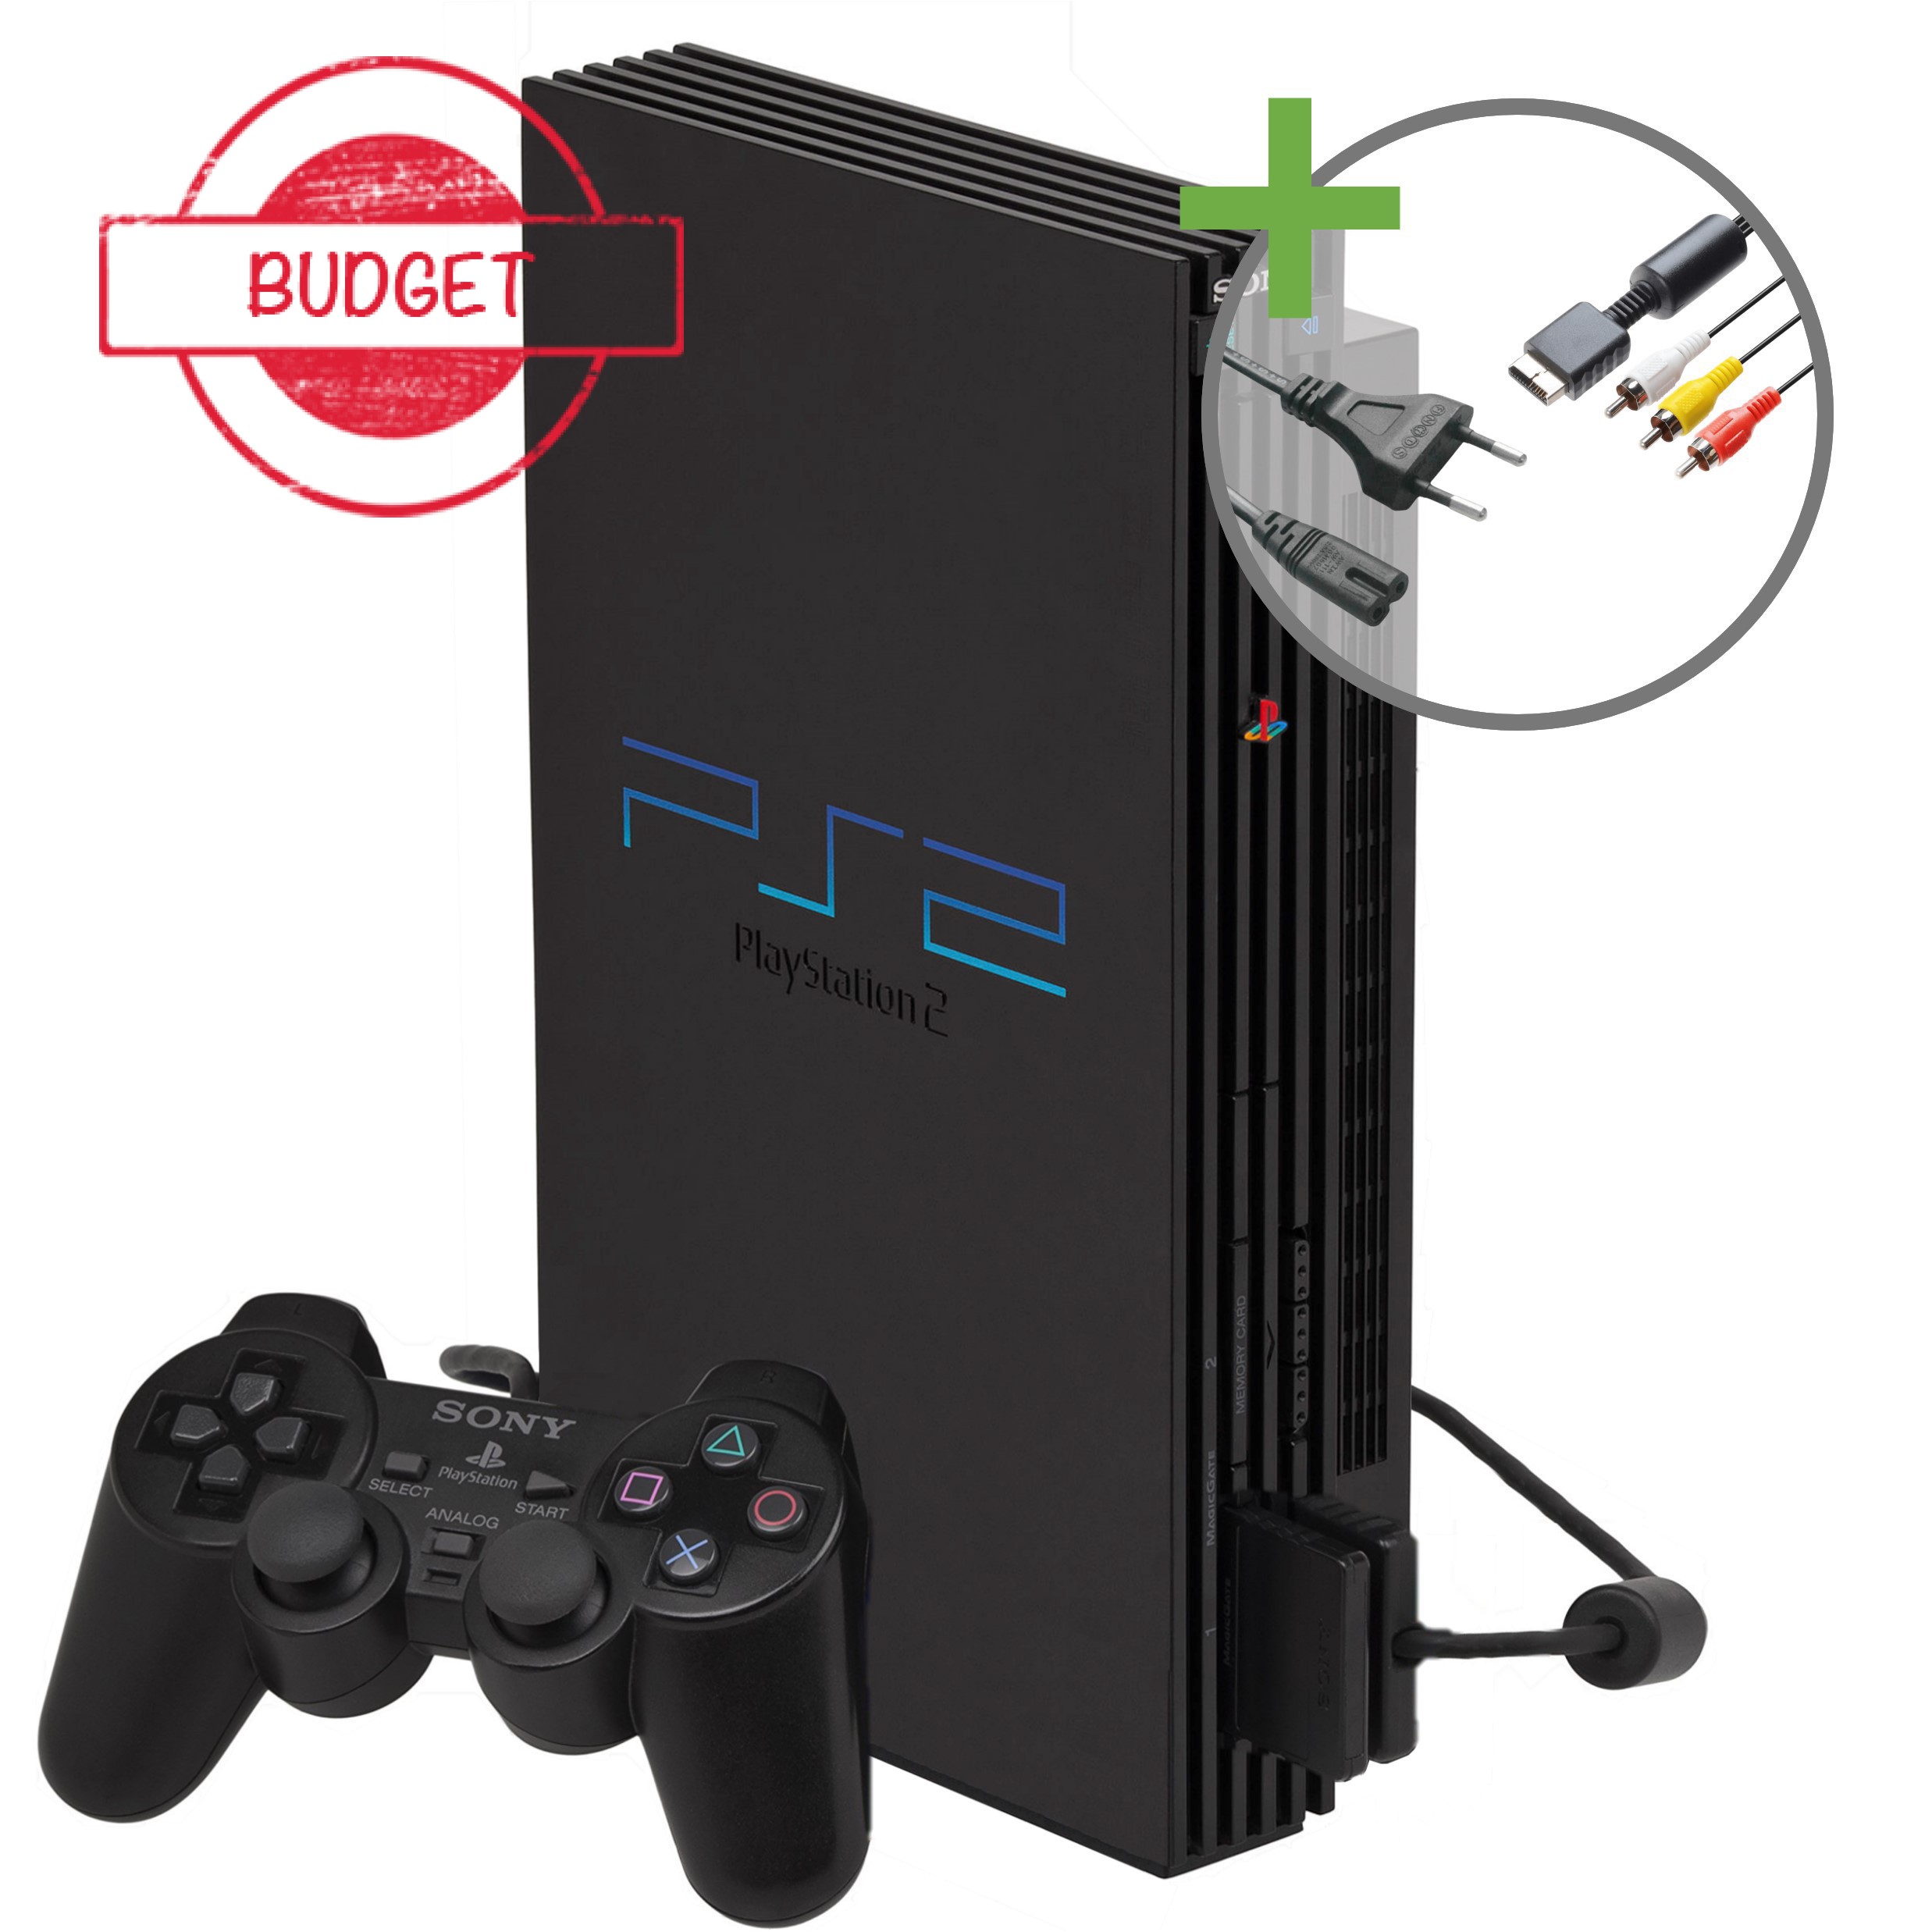 Sony PlayStation 2 Phat Starter Pack - Black Edition - Budget - Playstation 2 Hardware